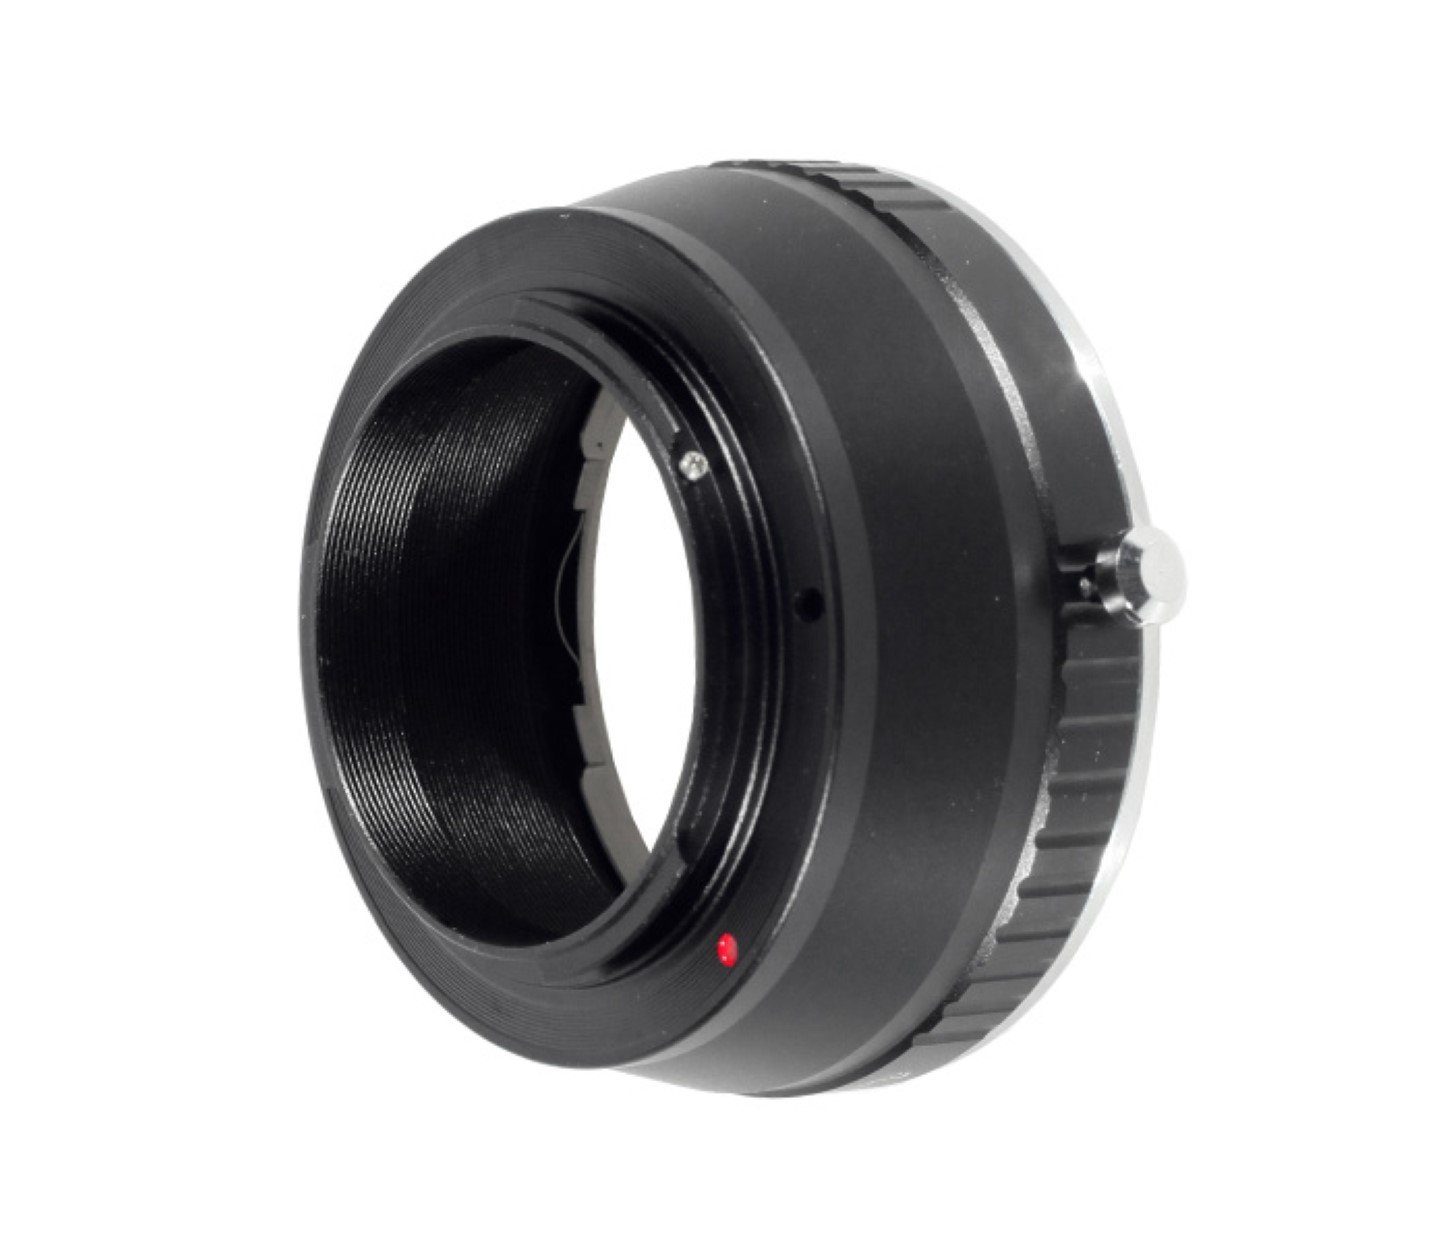 Canon Objektiveadapter Canon EOS für Linse Adapter an Kamera ayex M EF-S EOS